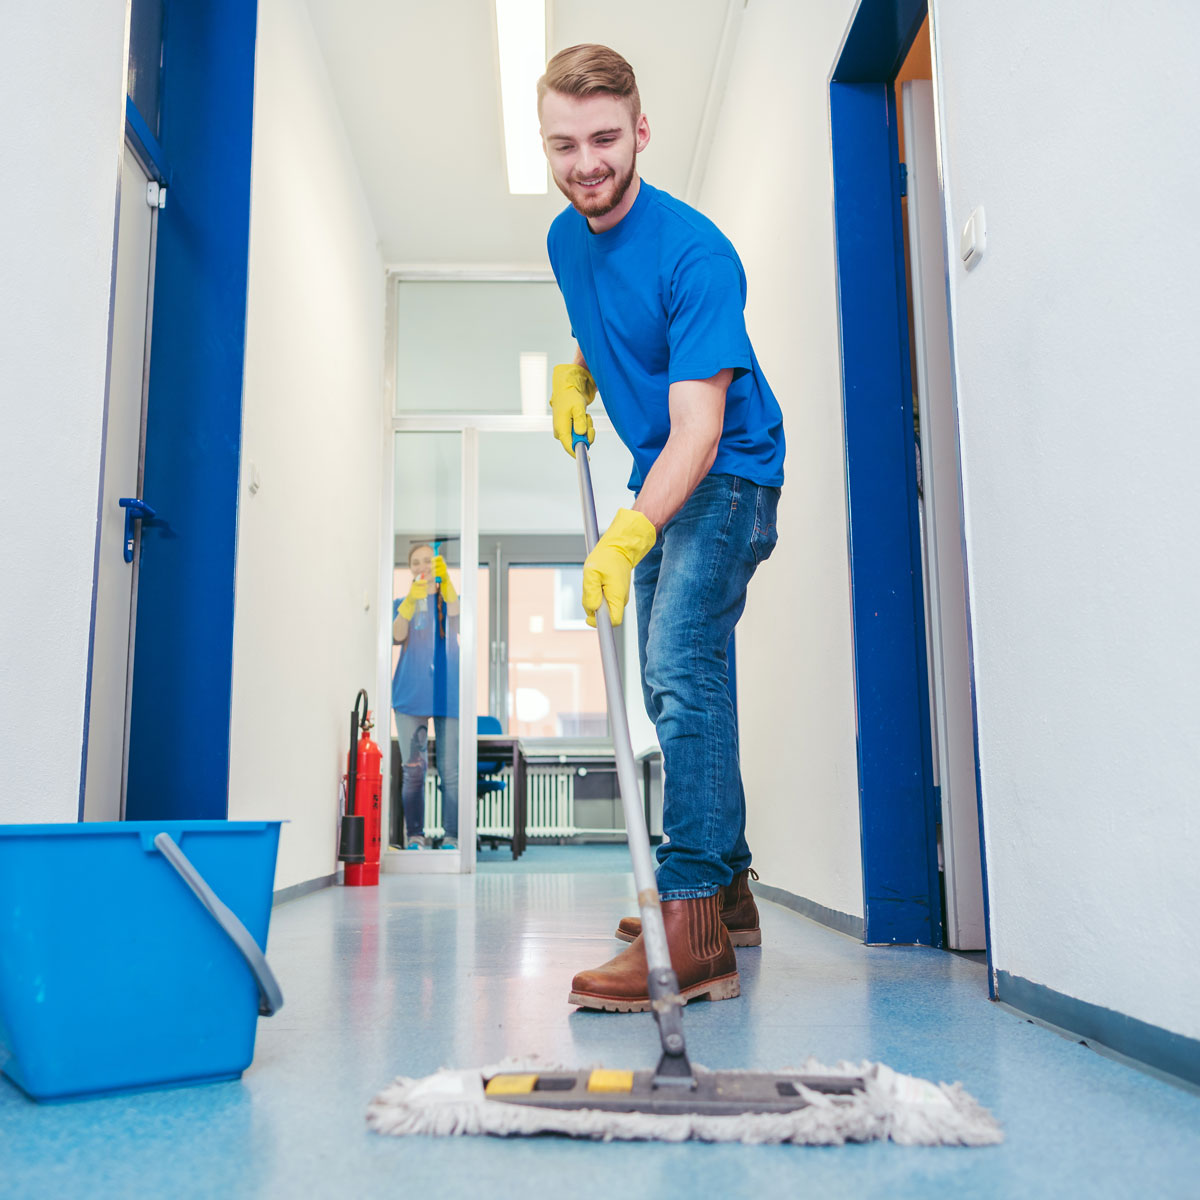 Man mopping a hallway wearing a blue t-shirt.